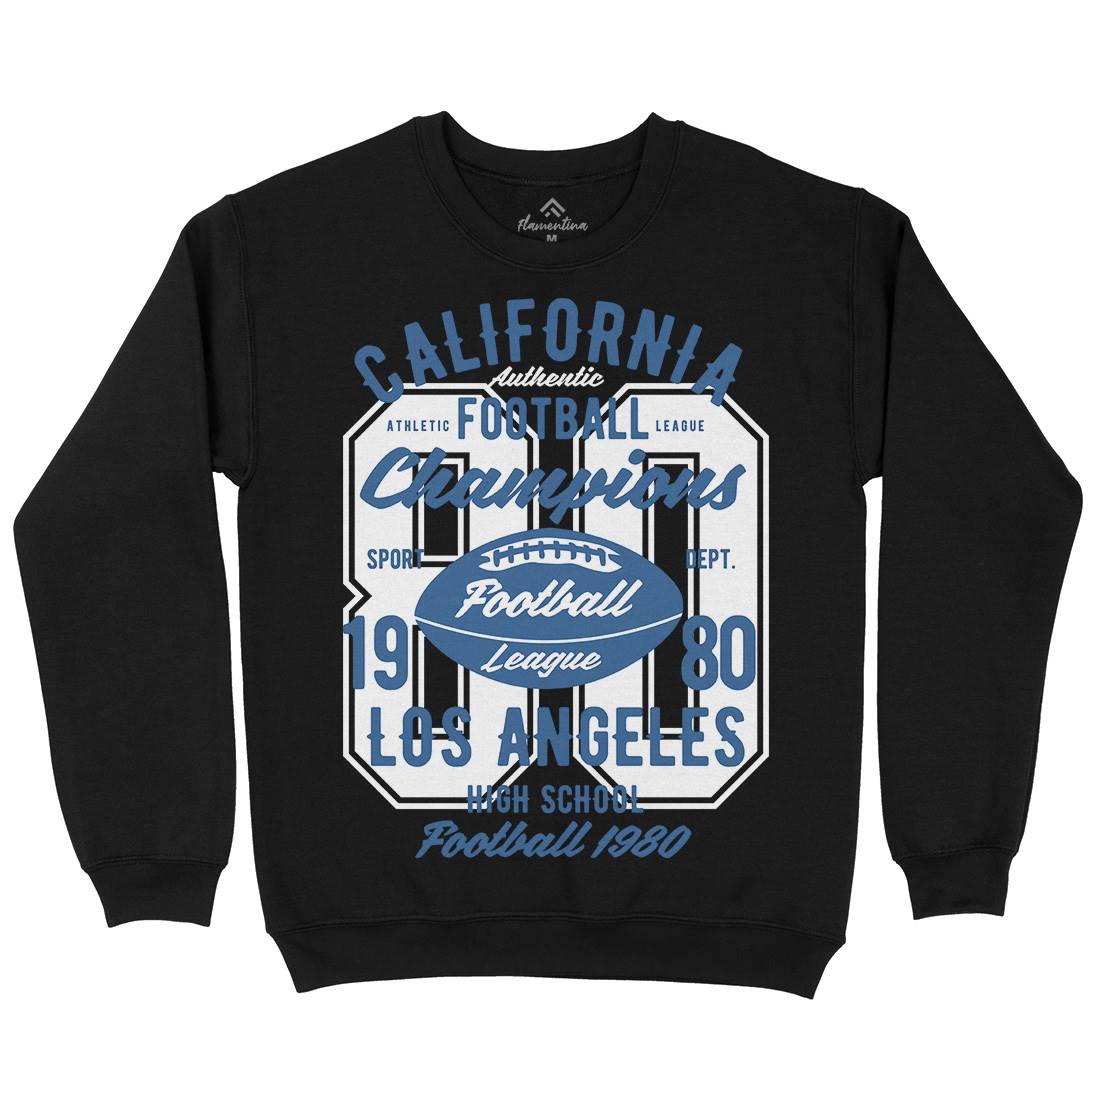 California Football League Kids Crew Neck Sweatshirt Sport B193